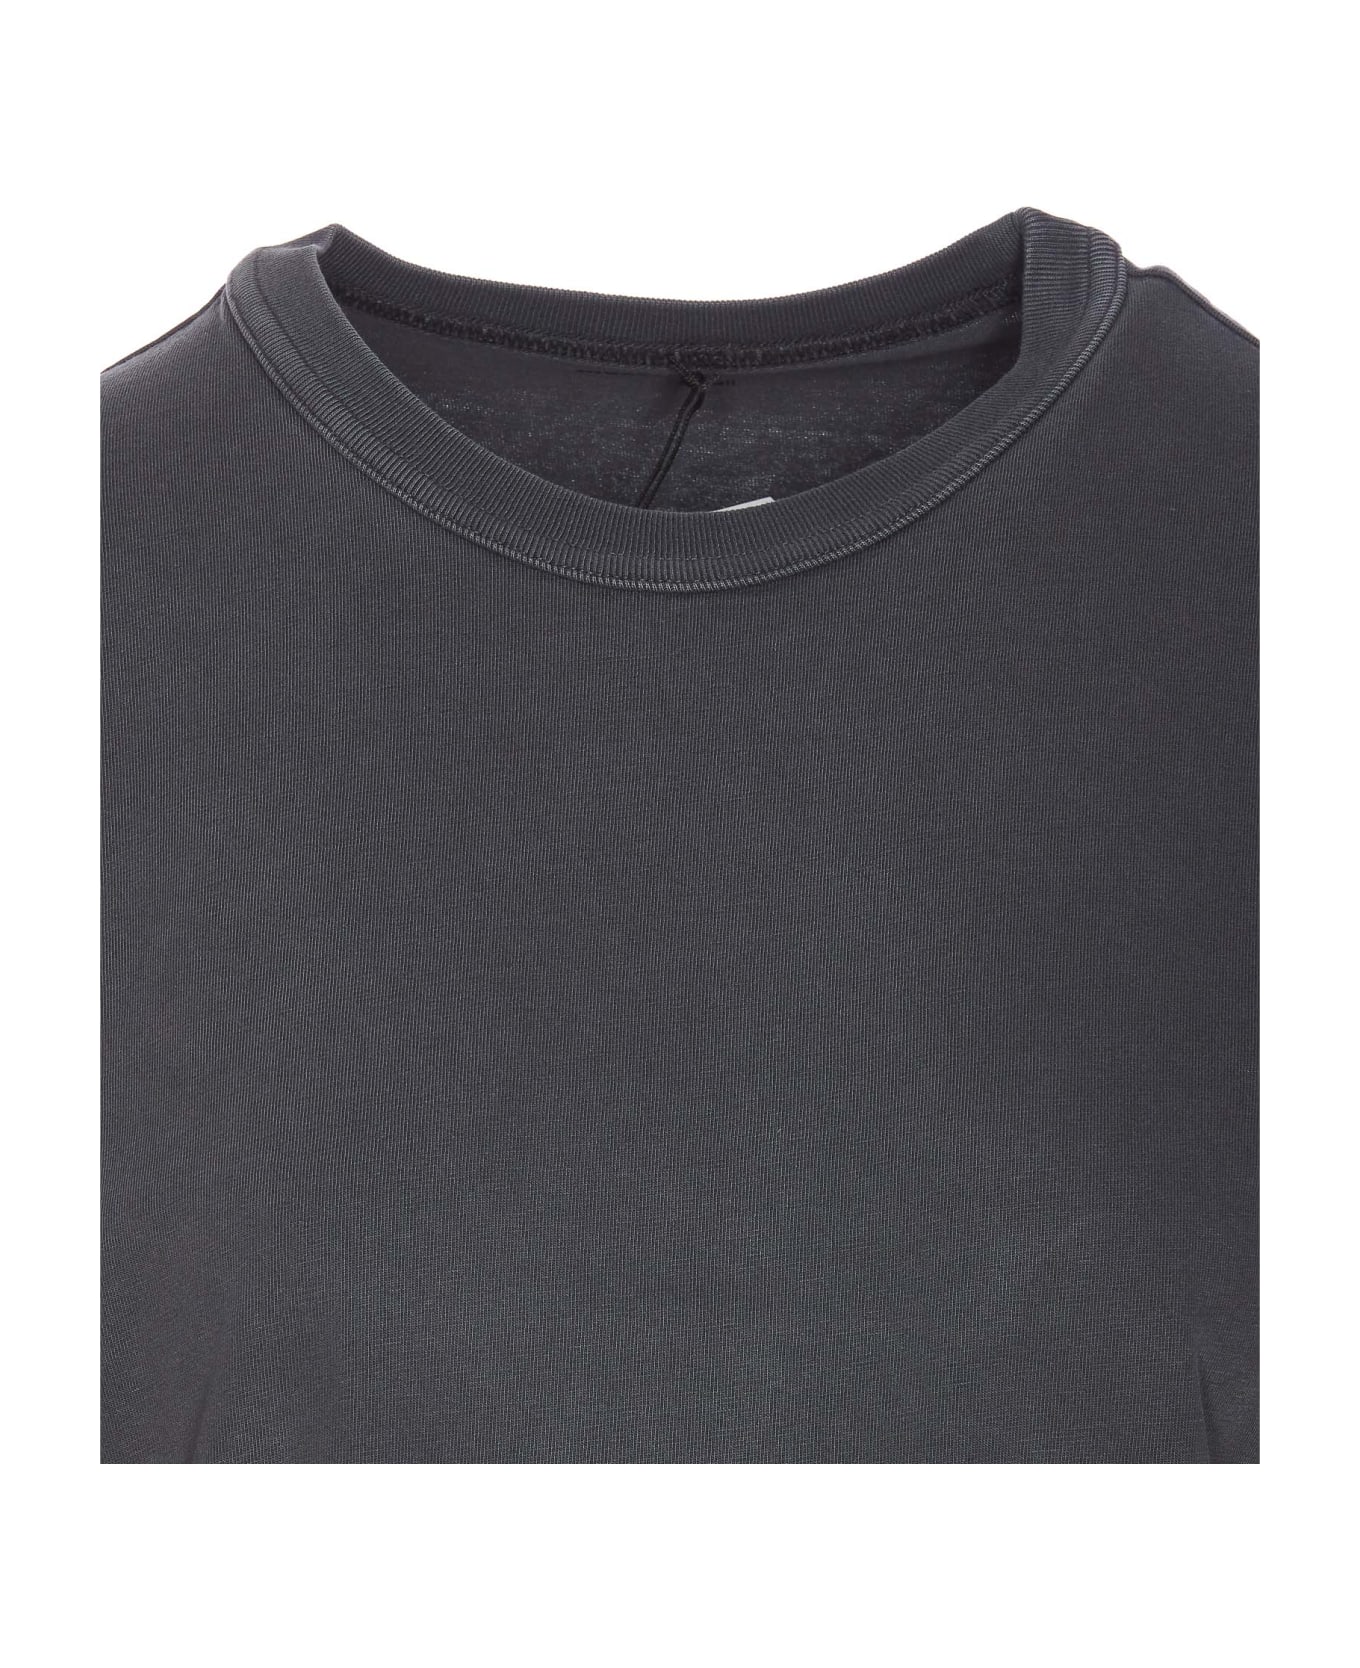 Alexander Wang Logo Print T-shirt - A Soft Obsidian